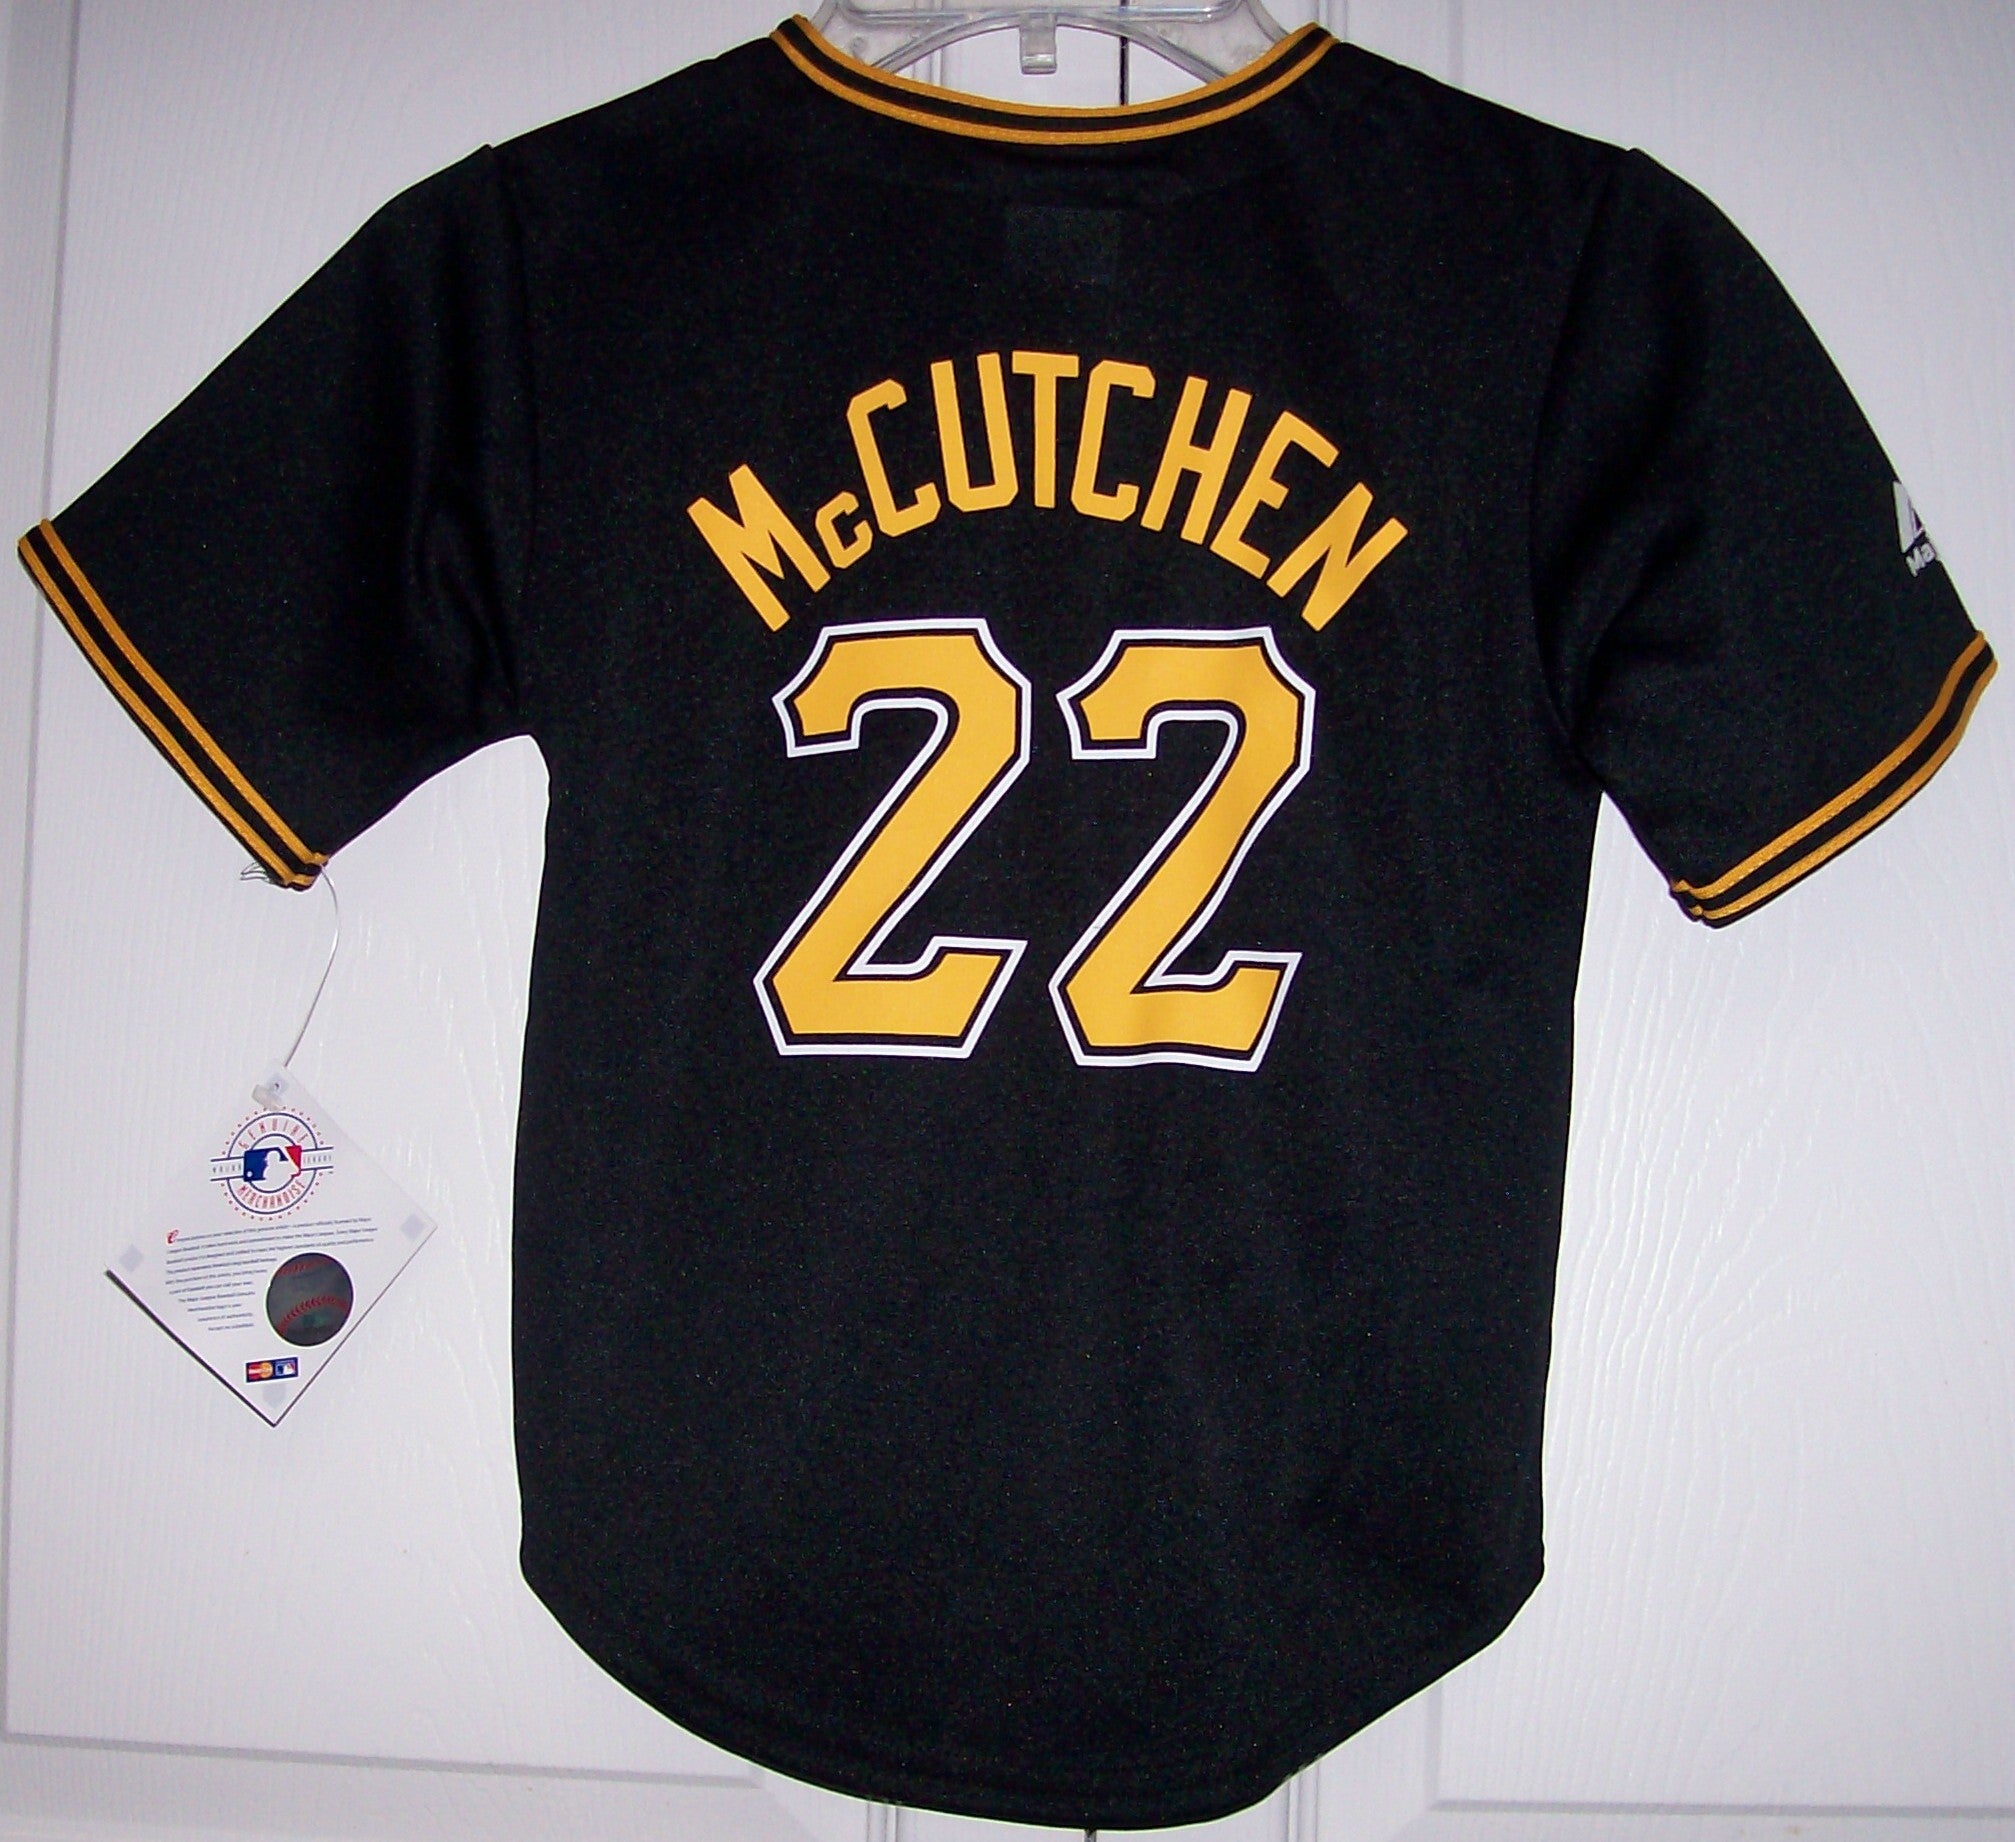 Pittsburgh Pirates YOUTH Majestic MLB Baseball jersey BLACK - Hockey Jersey  Outlet